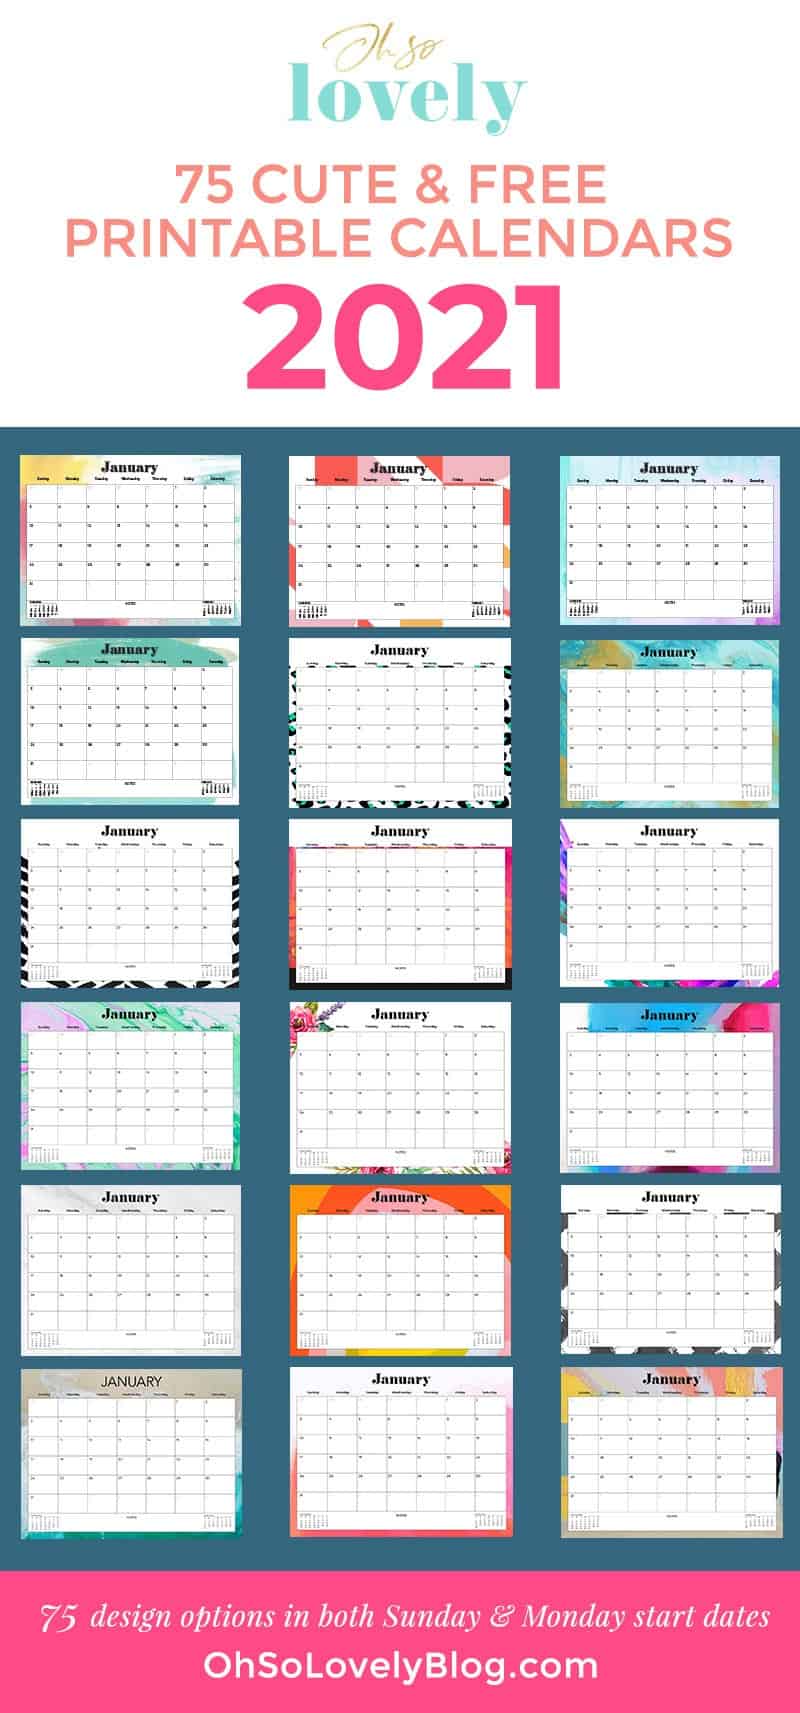 13 Cute Free Printable Calendars For 2021 You'll Love ...